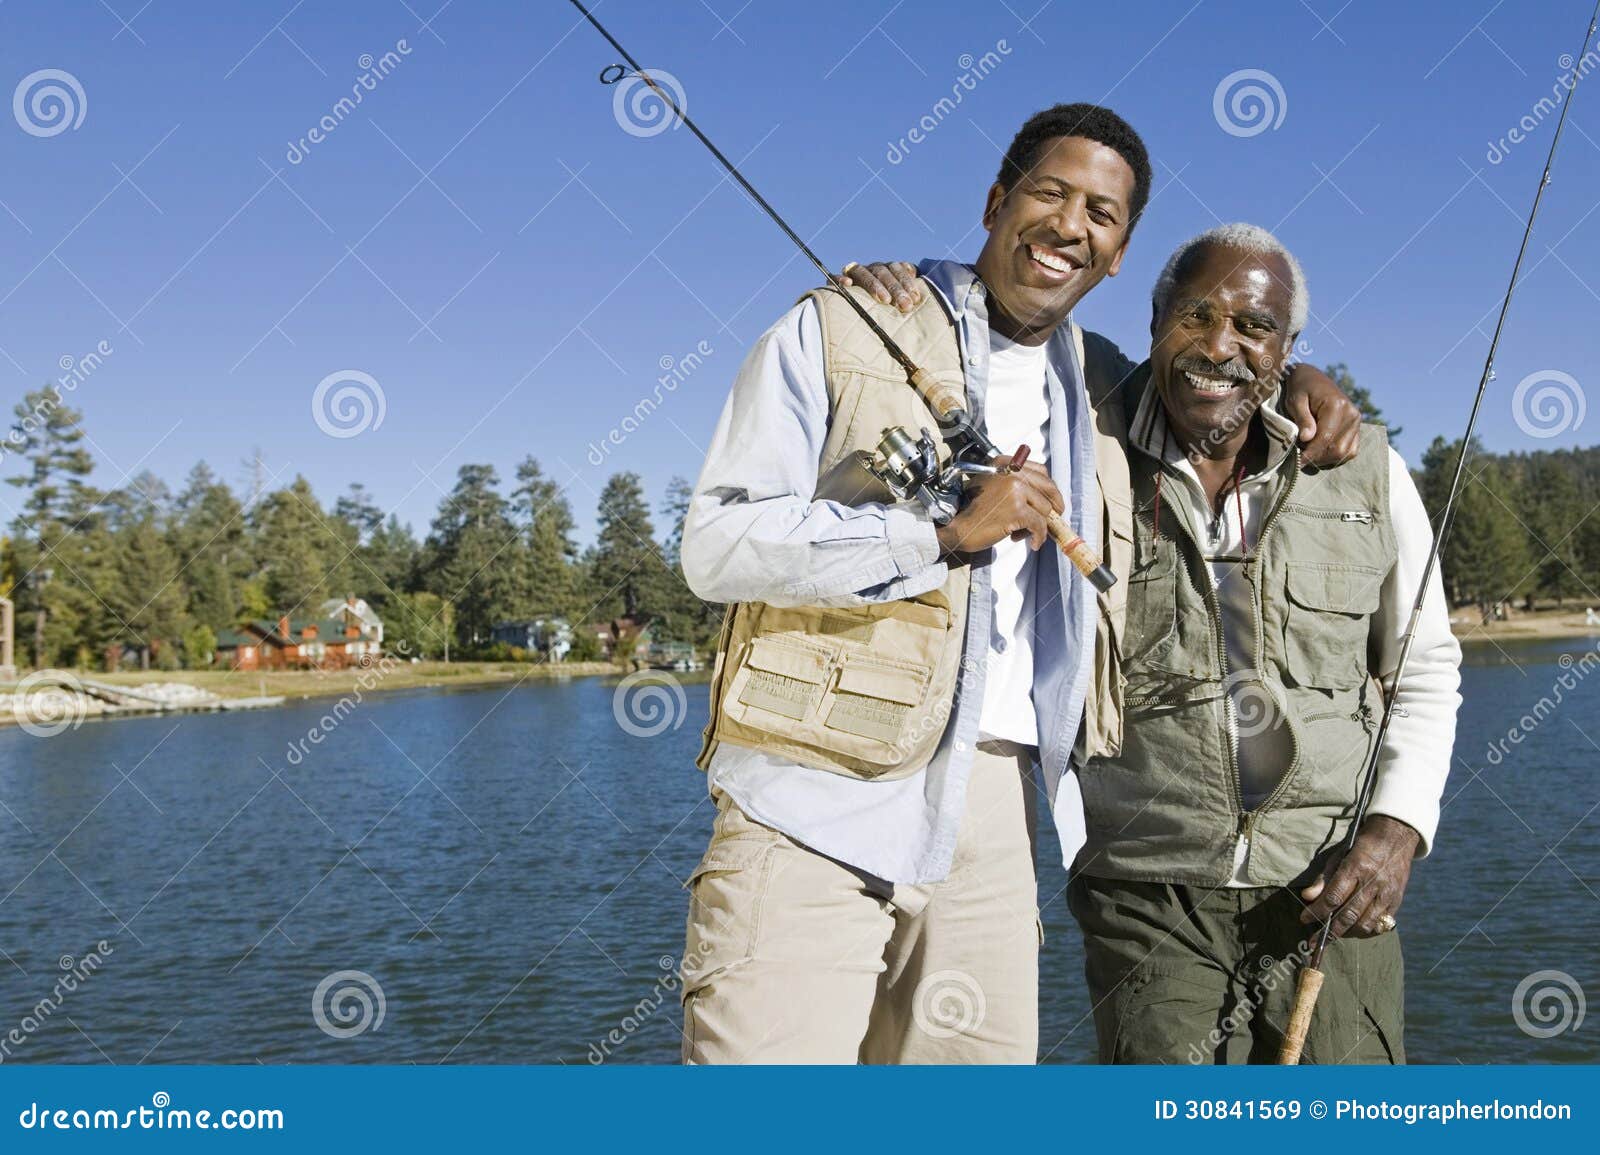 https://thumbs.dreamstime.com/z/happy-senior-man-son-fishing-rods-lake-portrait-men-adult-holding-30841569.jpg